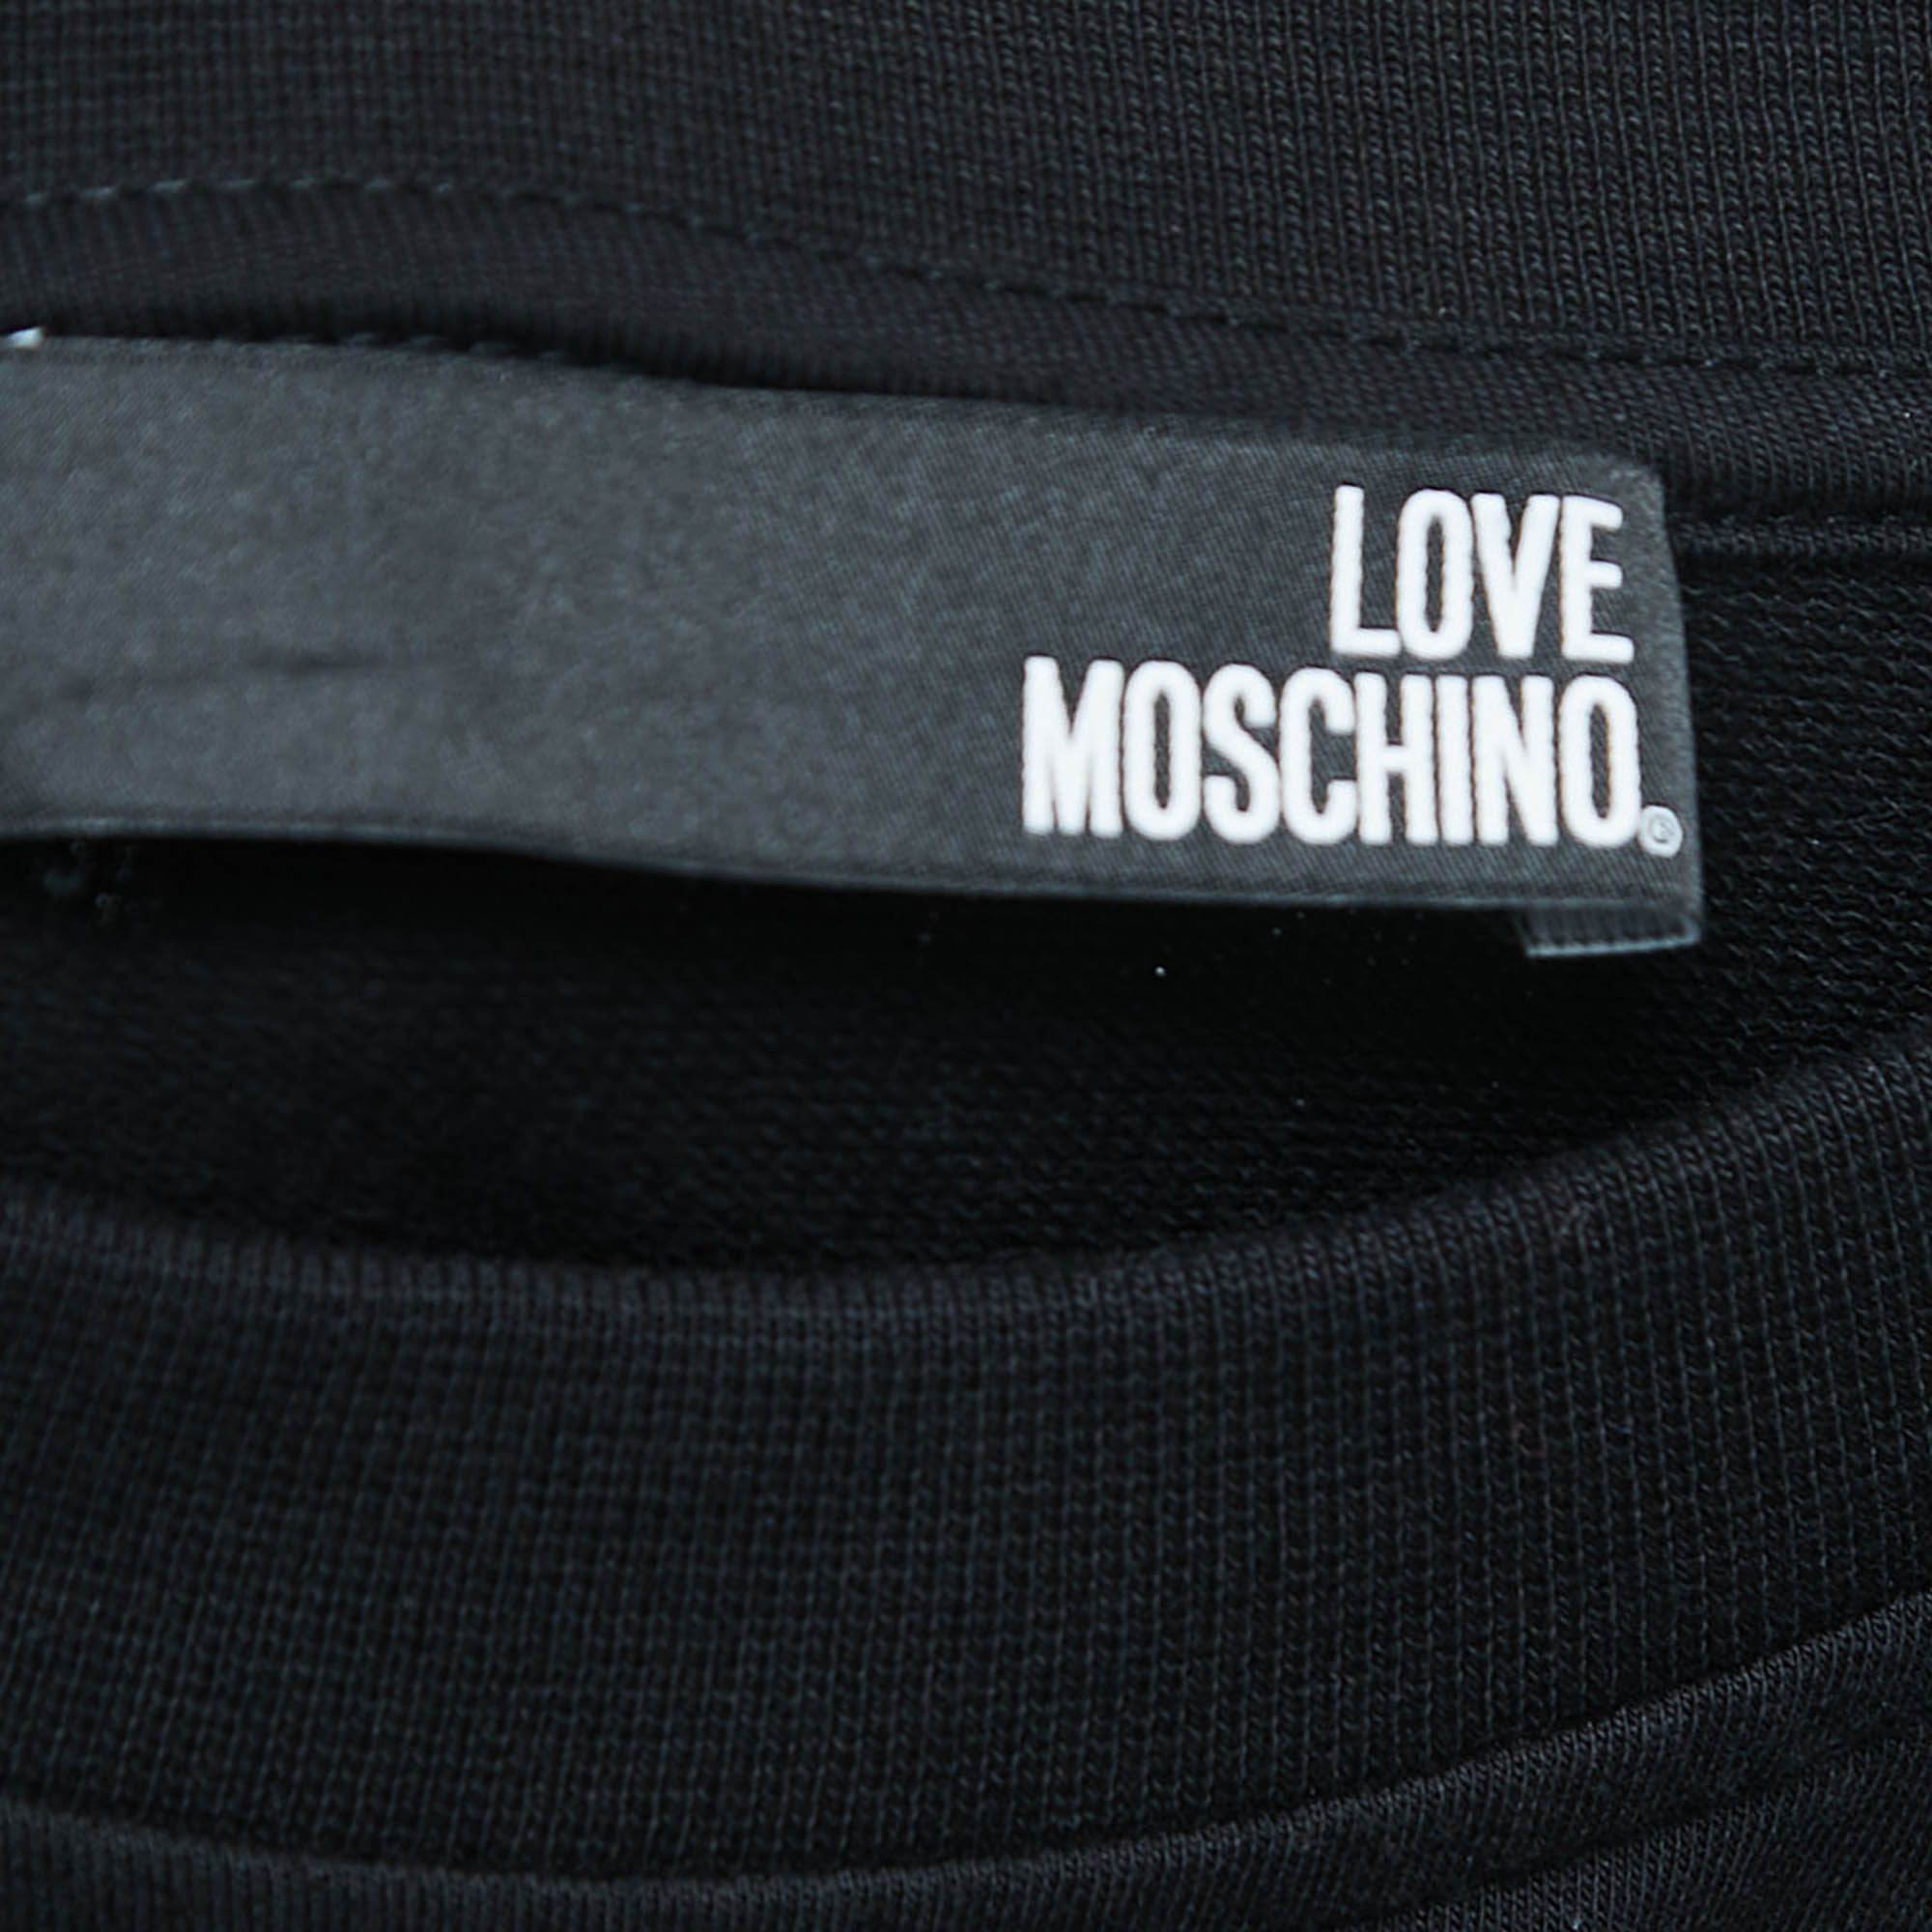 Love Moschino Black Digital Print Cotton Dramatic Sleeve T-Shirt S